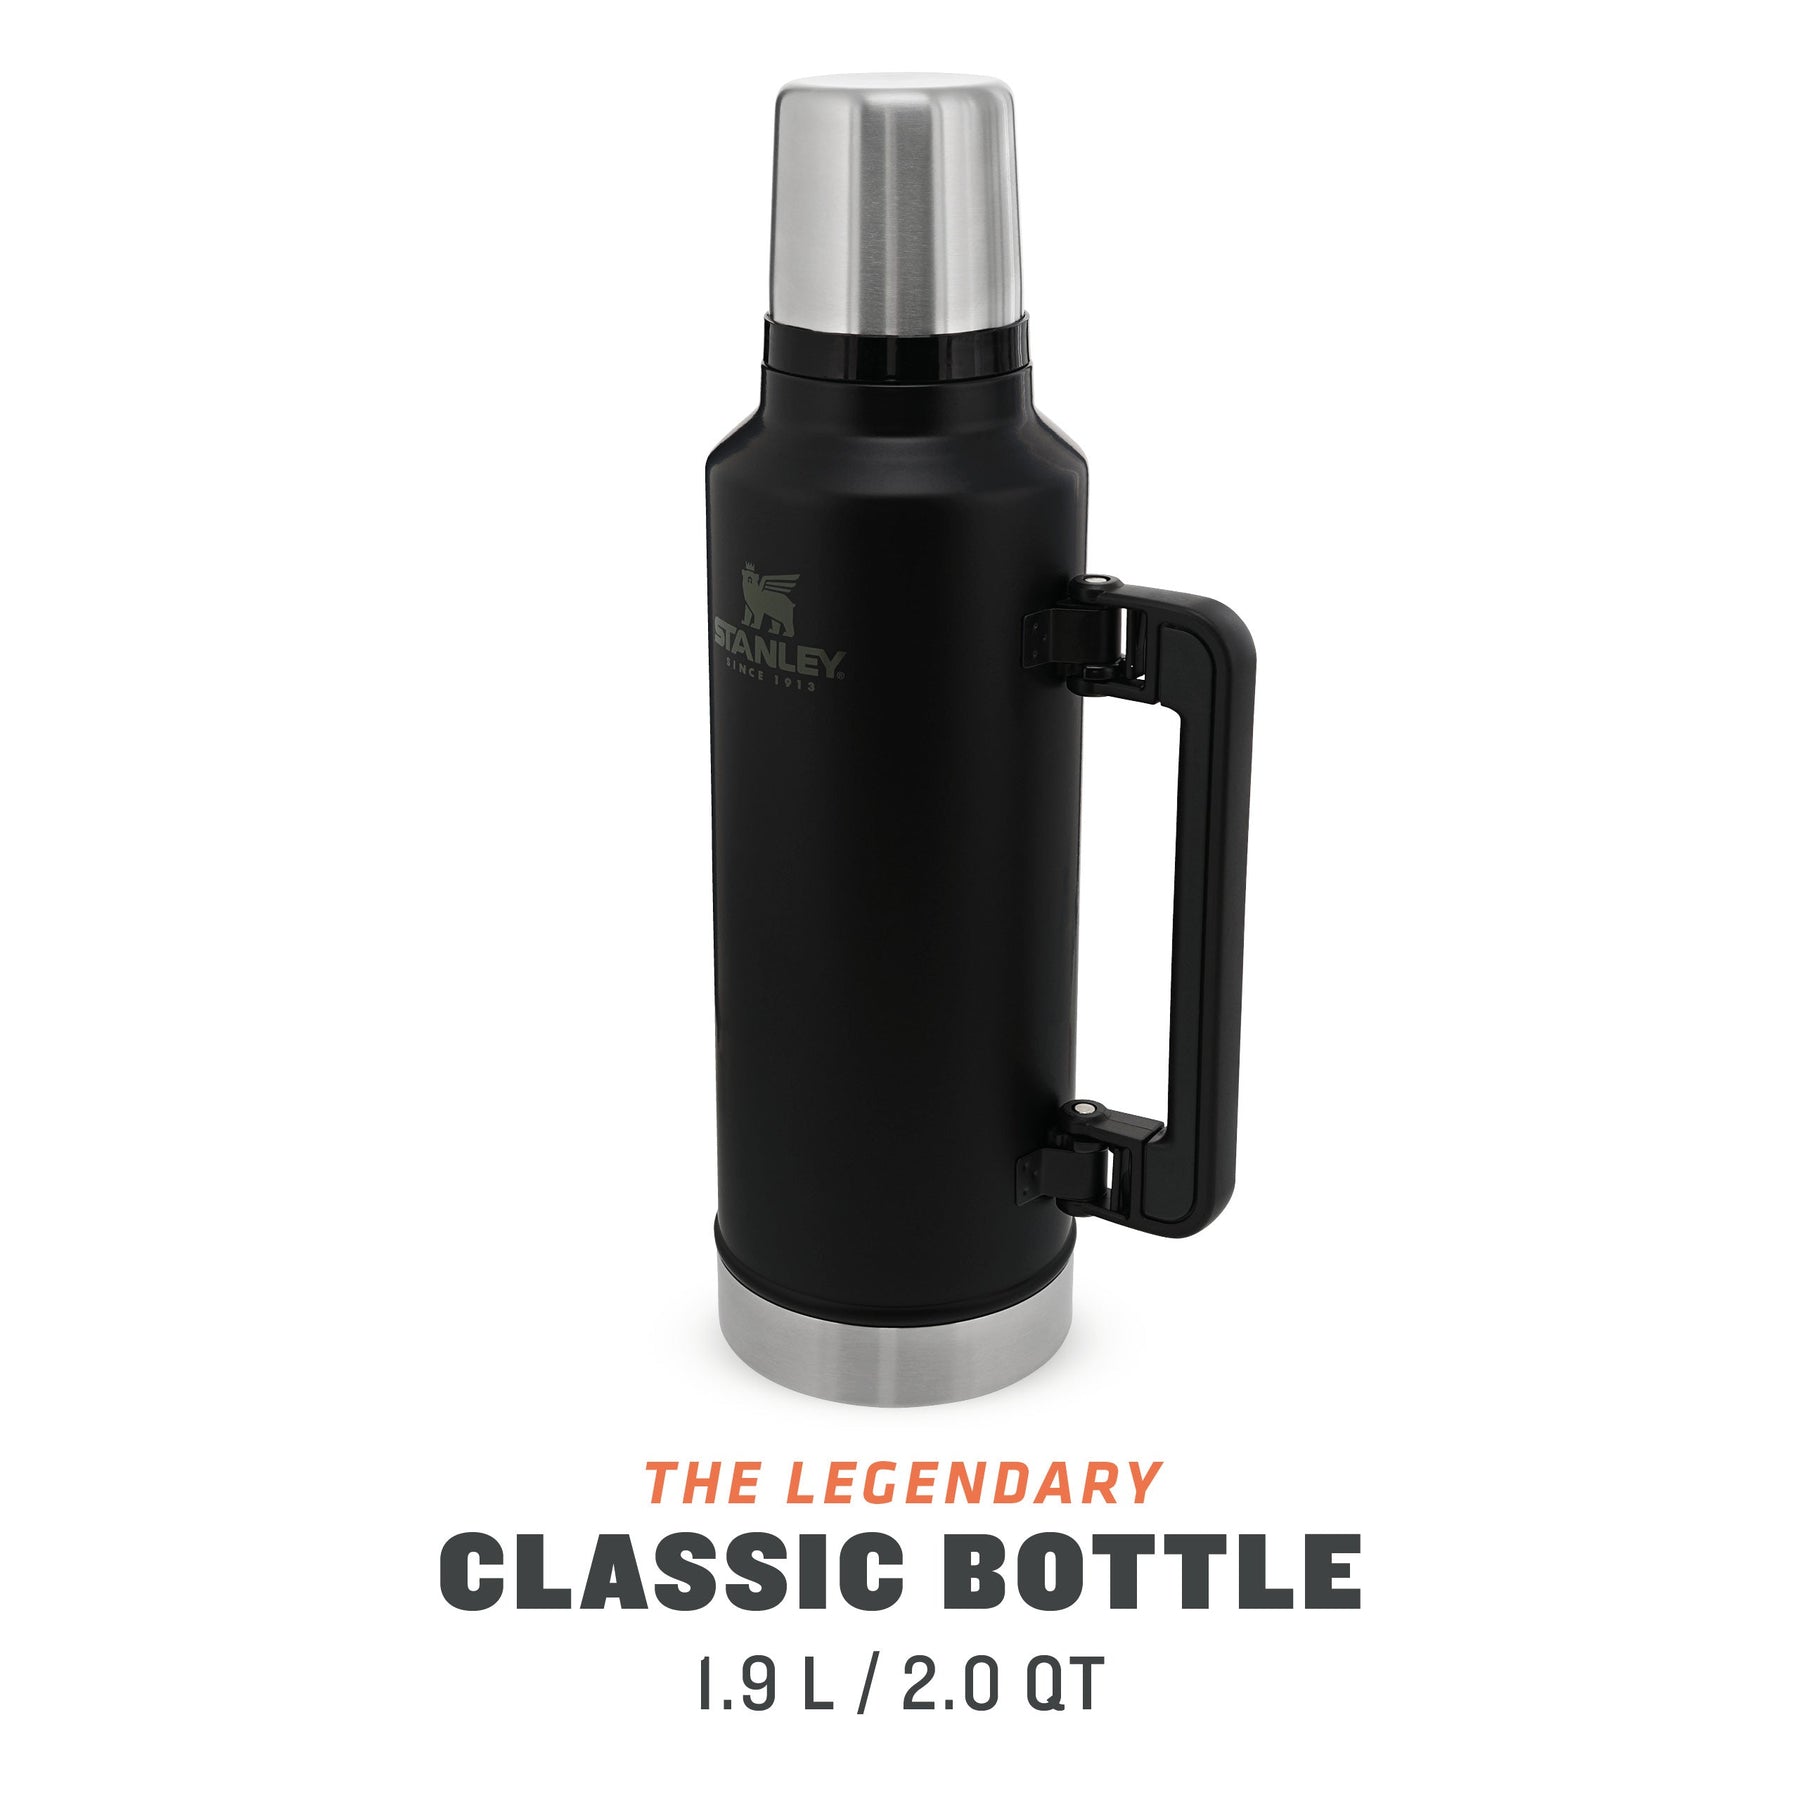 Stanley Classic Legendary 20 oz Bottle, Charcoal